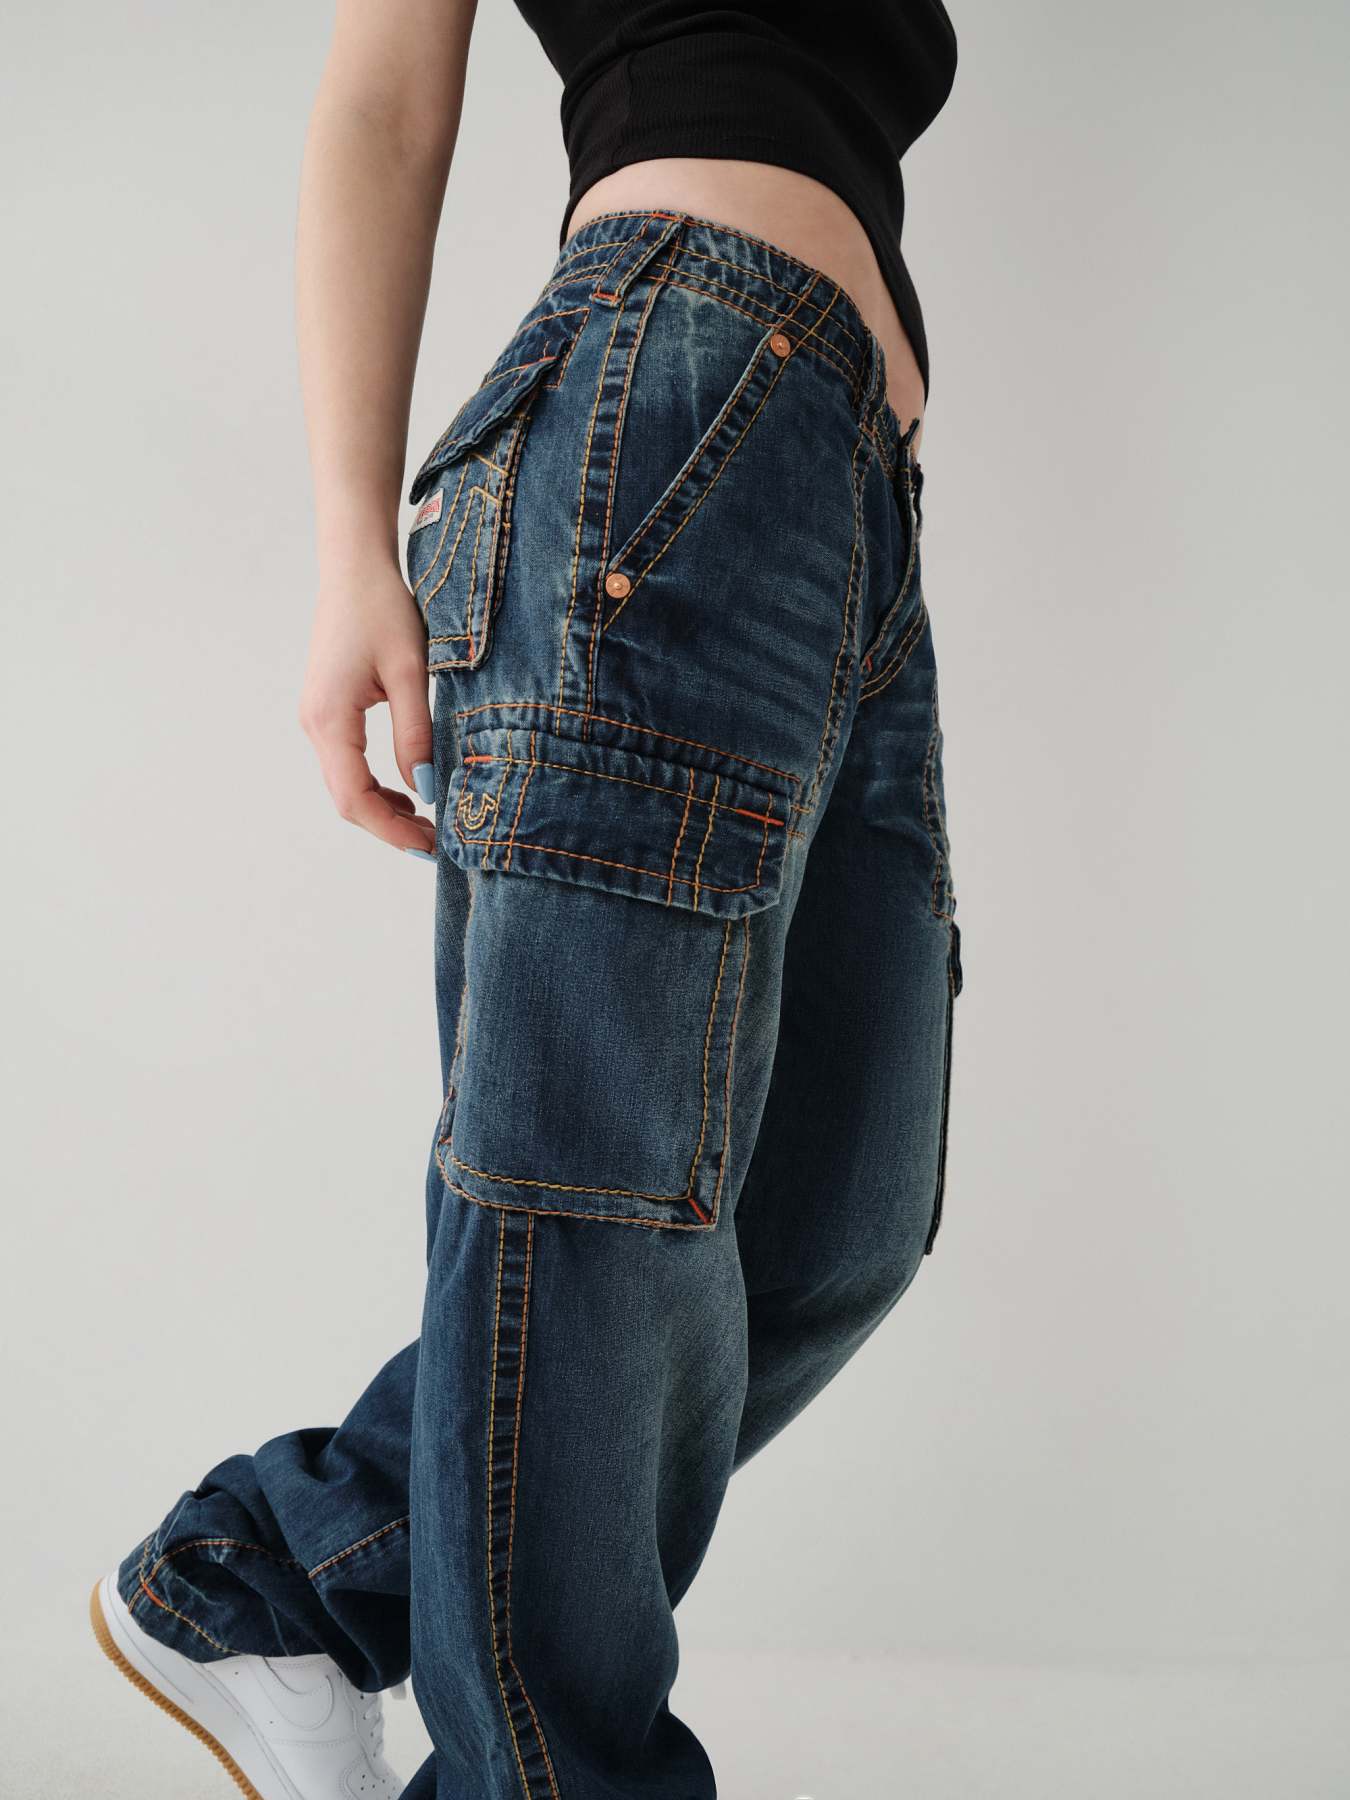 NWT True Religion Girls Big T Jeans, Size 10, Pink Stitching 